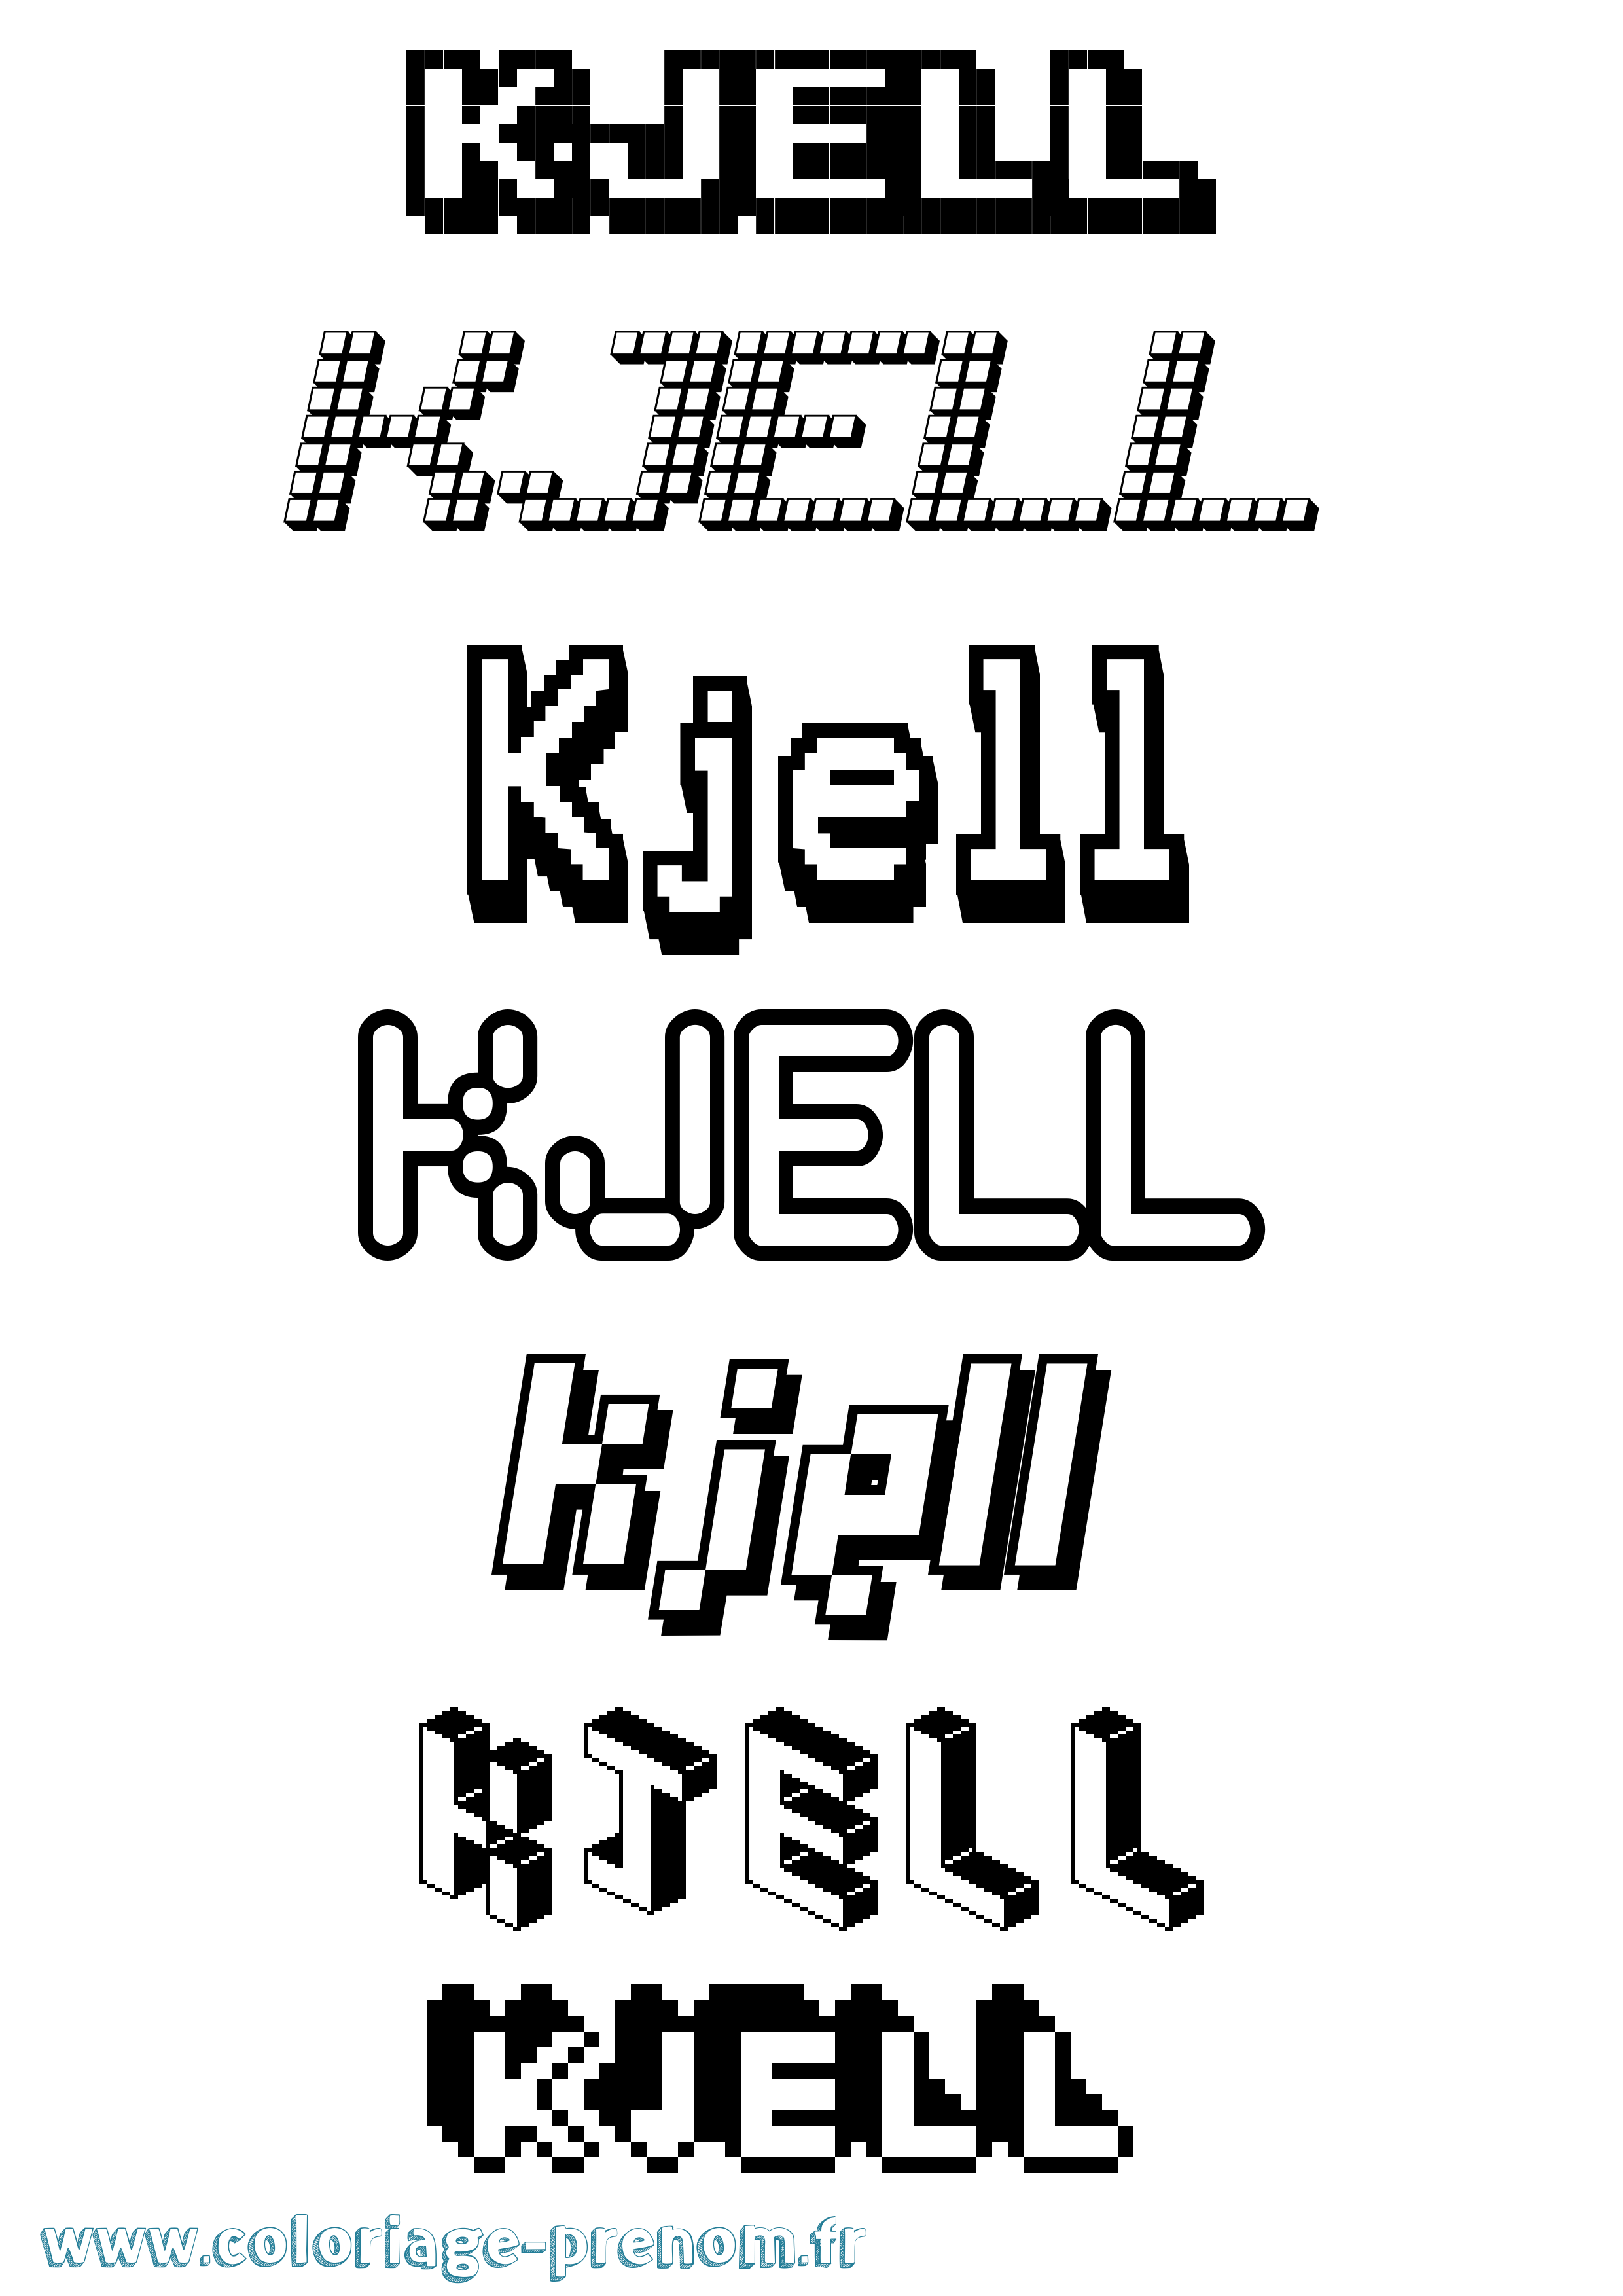 Coloriage prénom Kjell Pixel